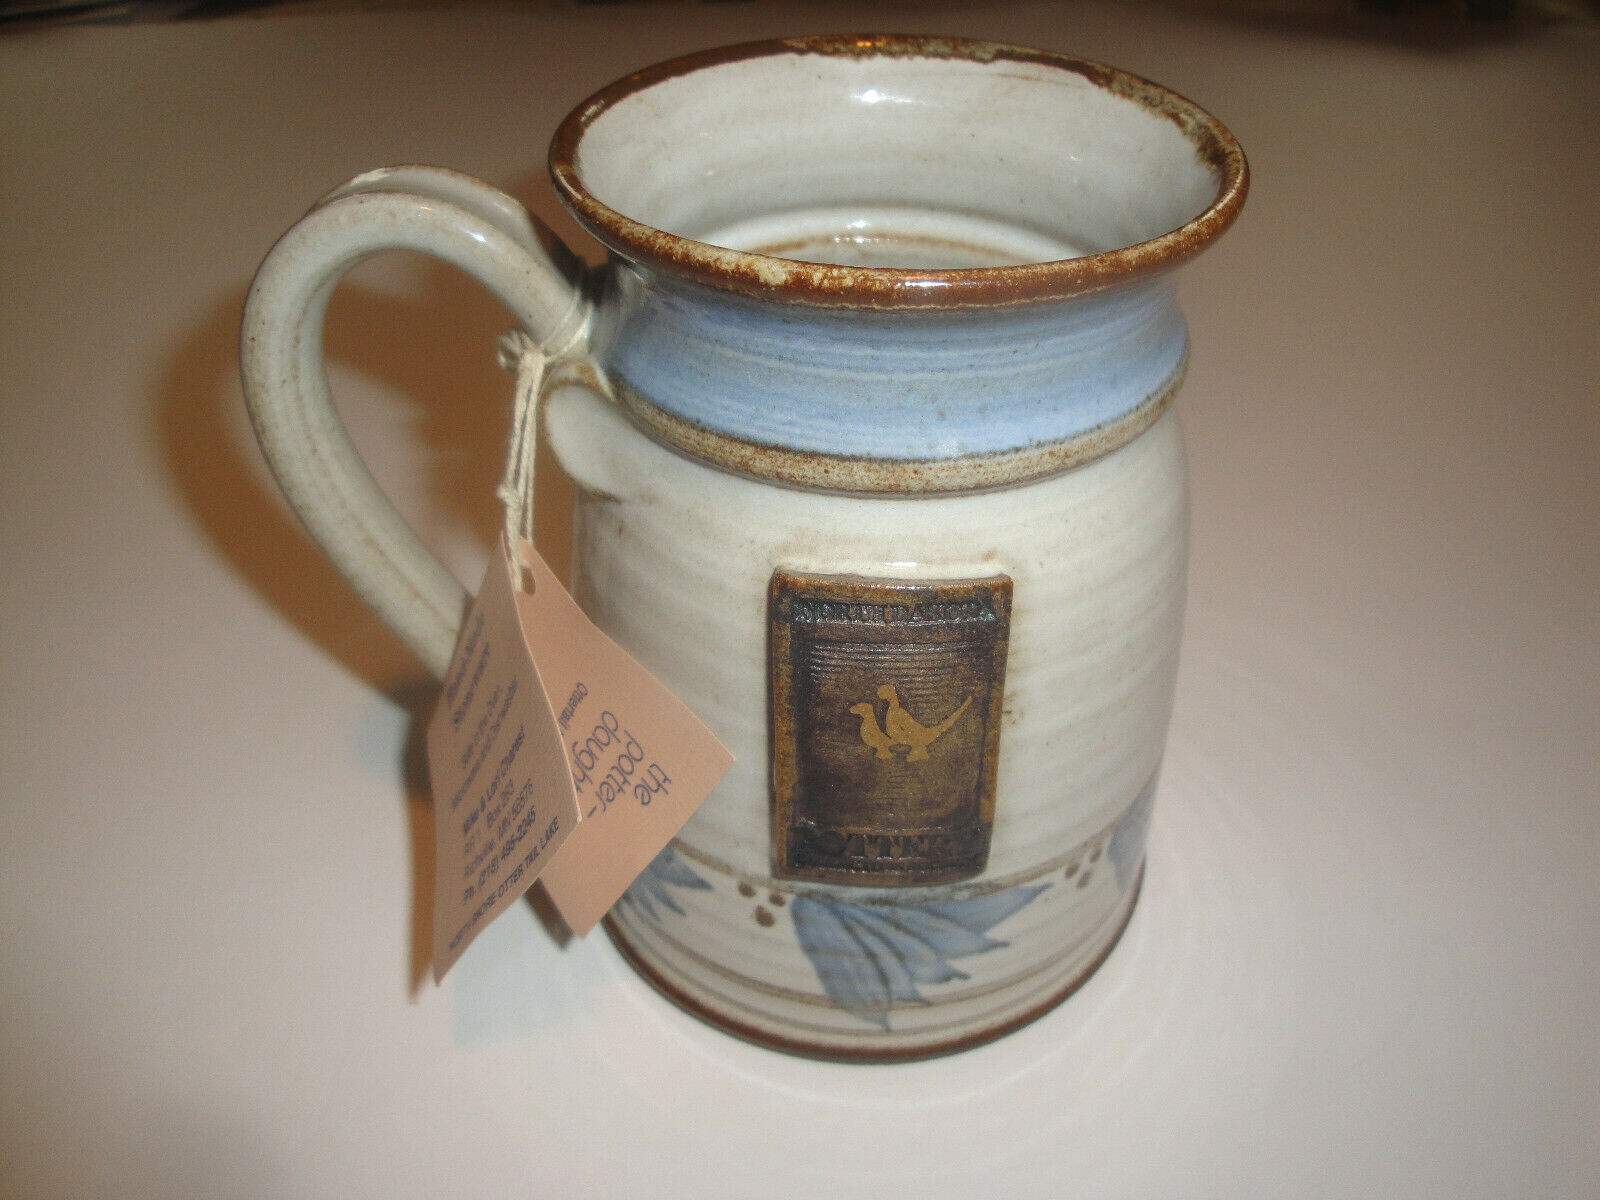 1997 Ndpcs Convention Prize Pottery Mug